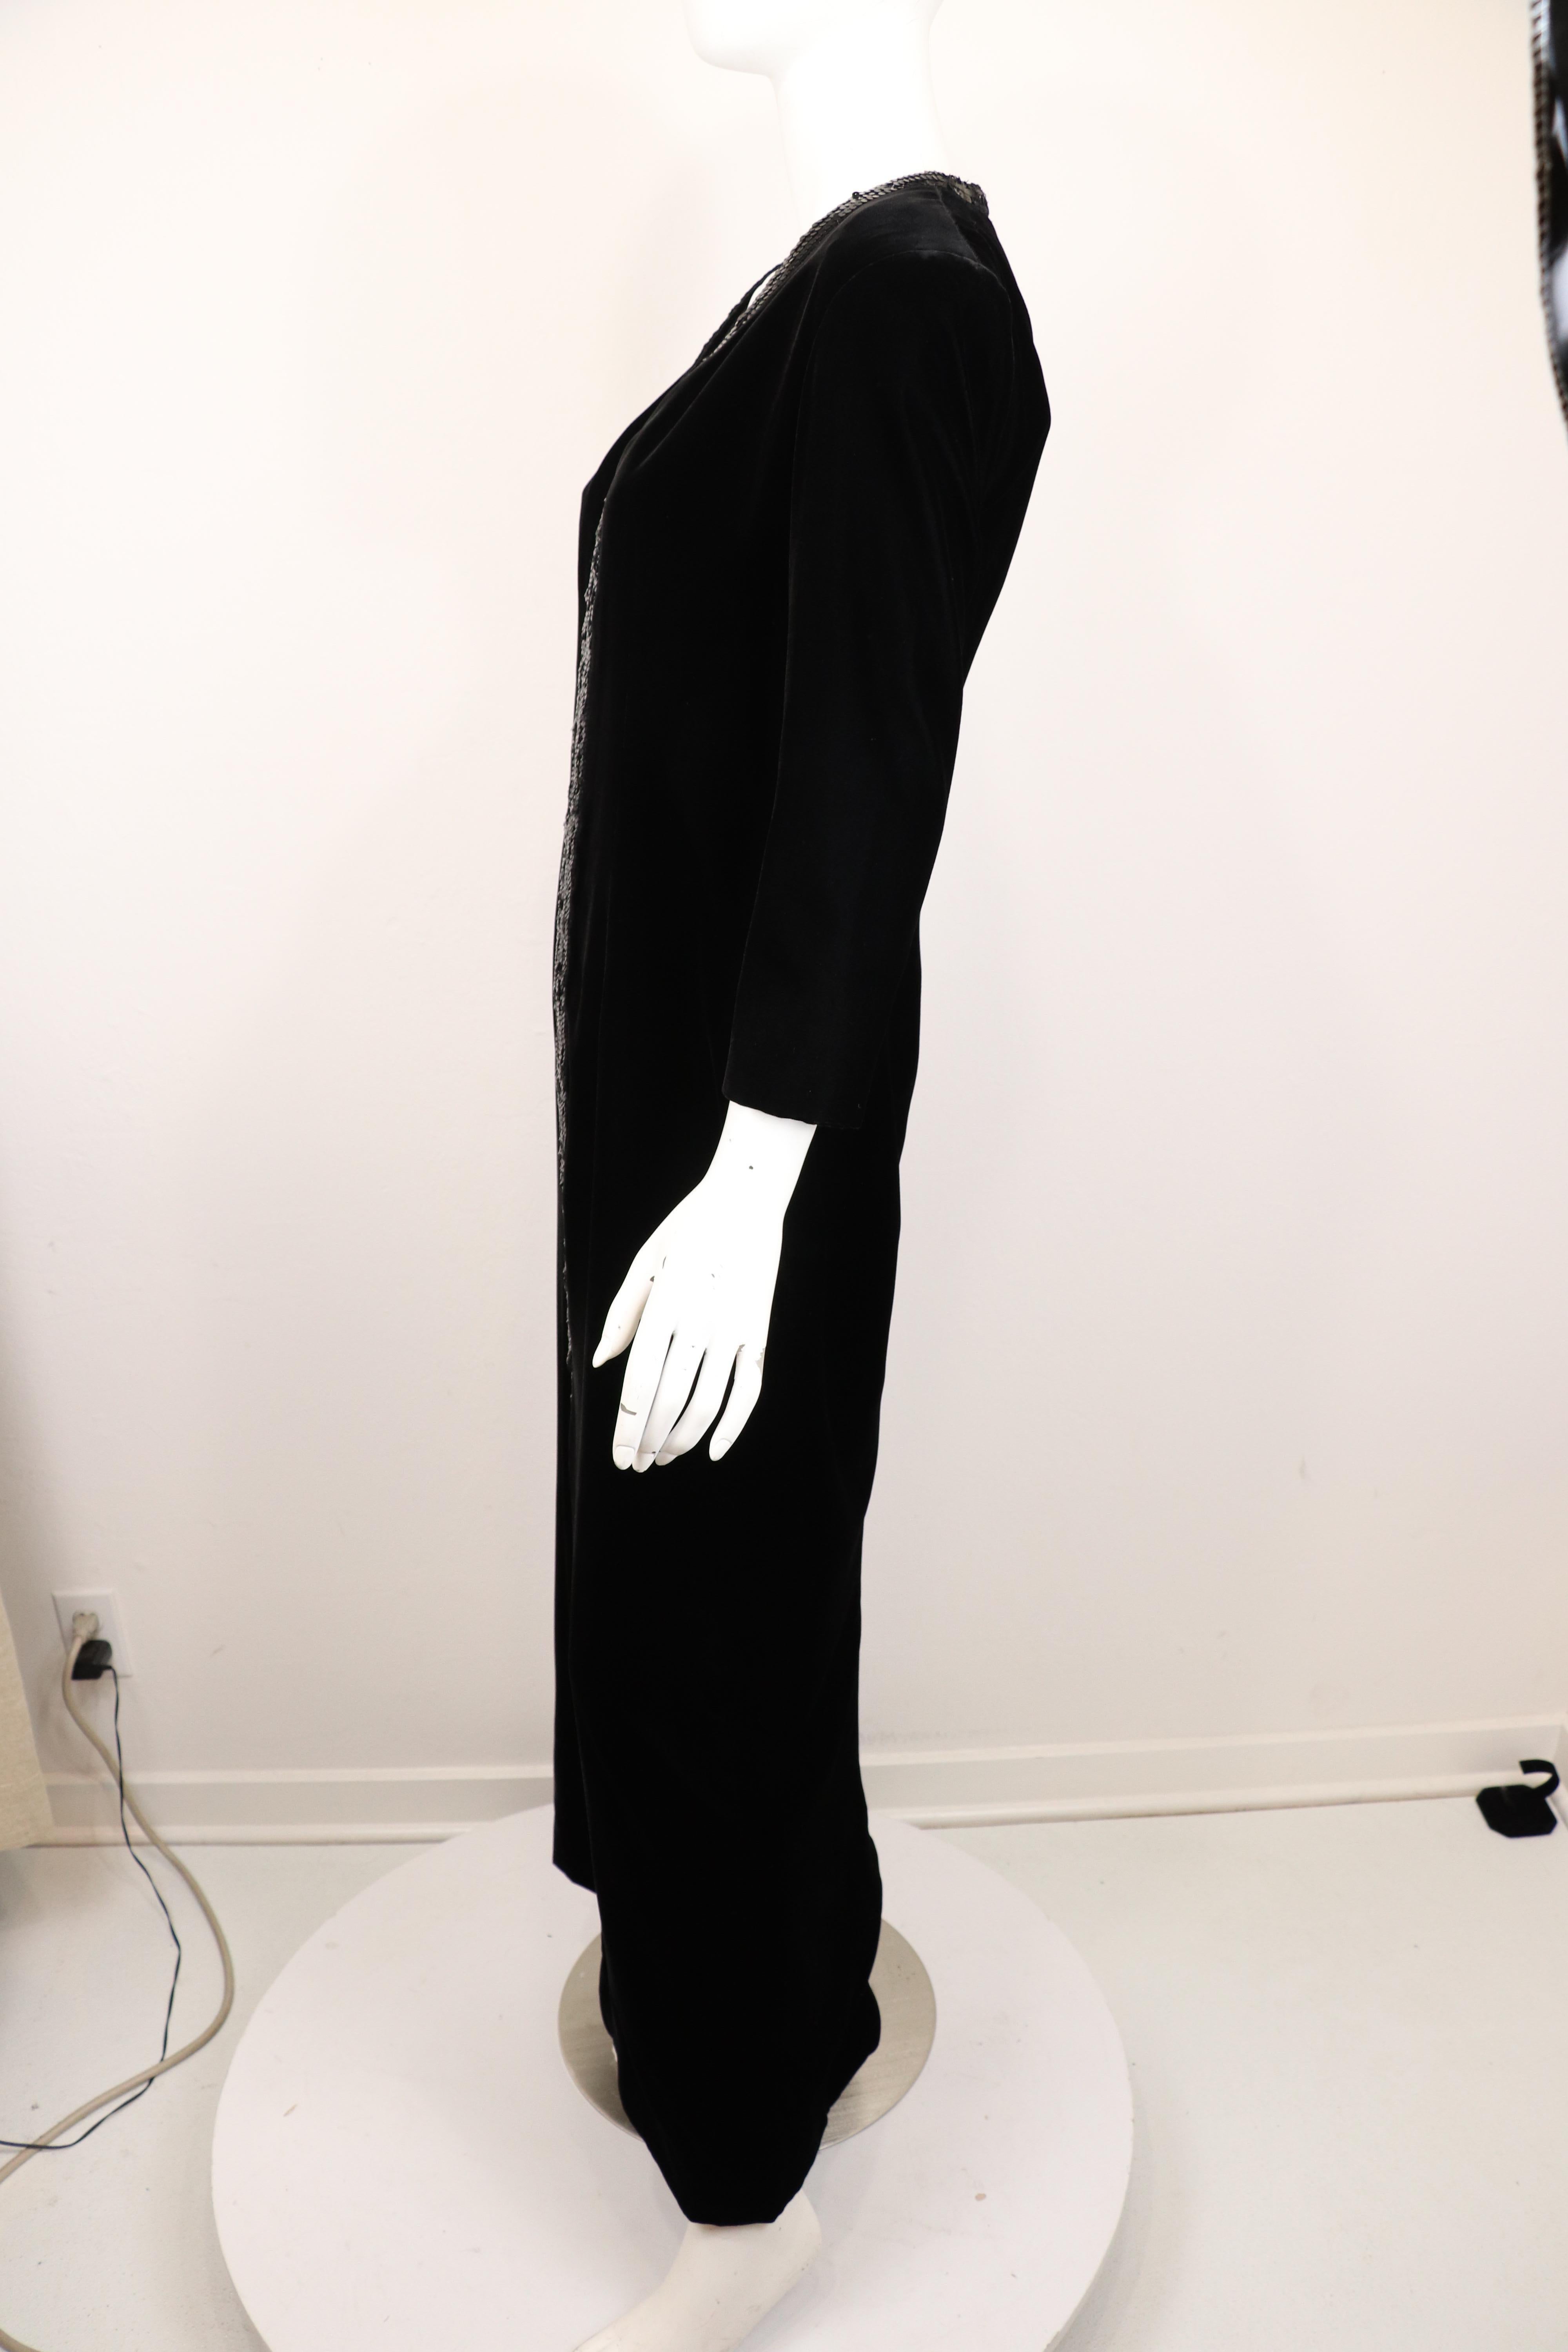 Yves Saint Laurent Rive Gauche Black Velvet & Sequins Gown 1970's In Excellent Condition In Carmel, CA